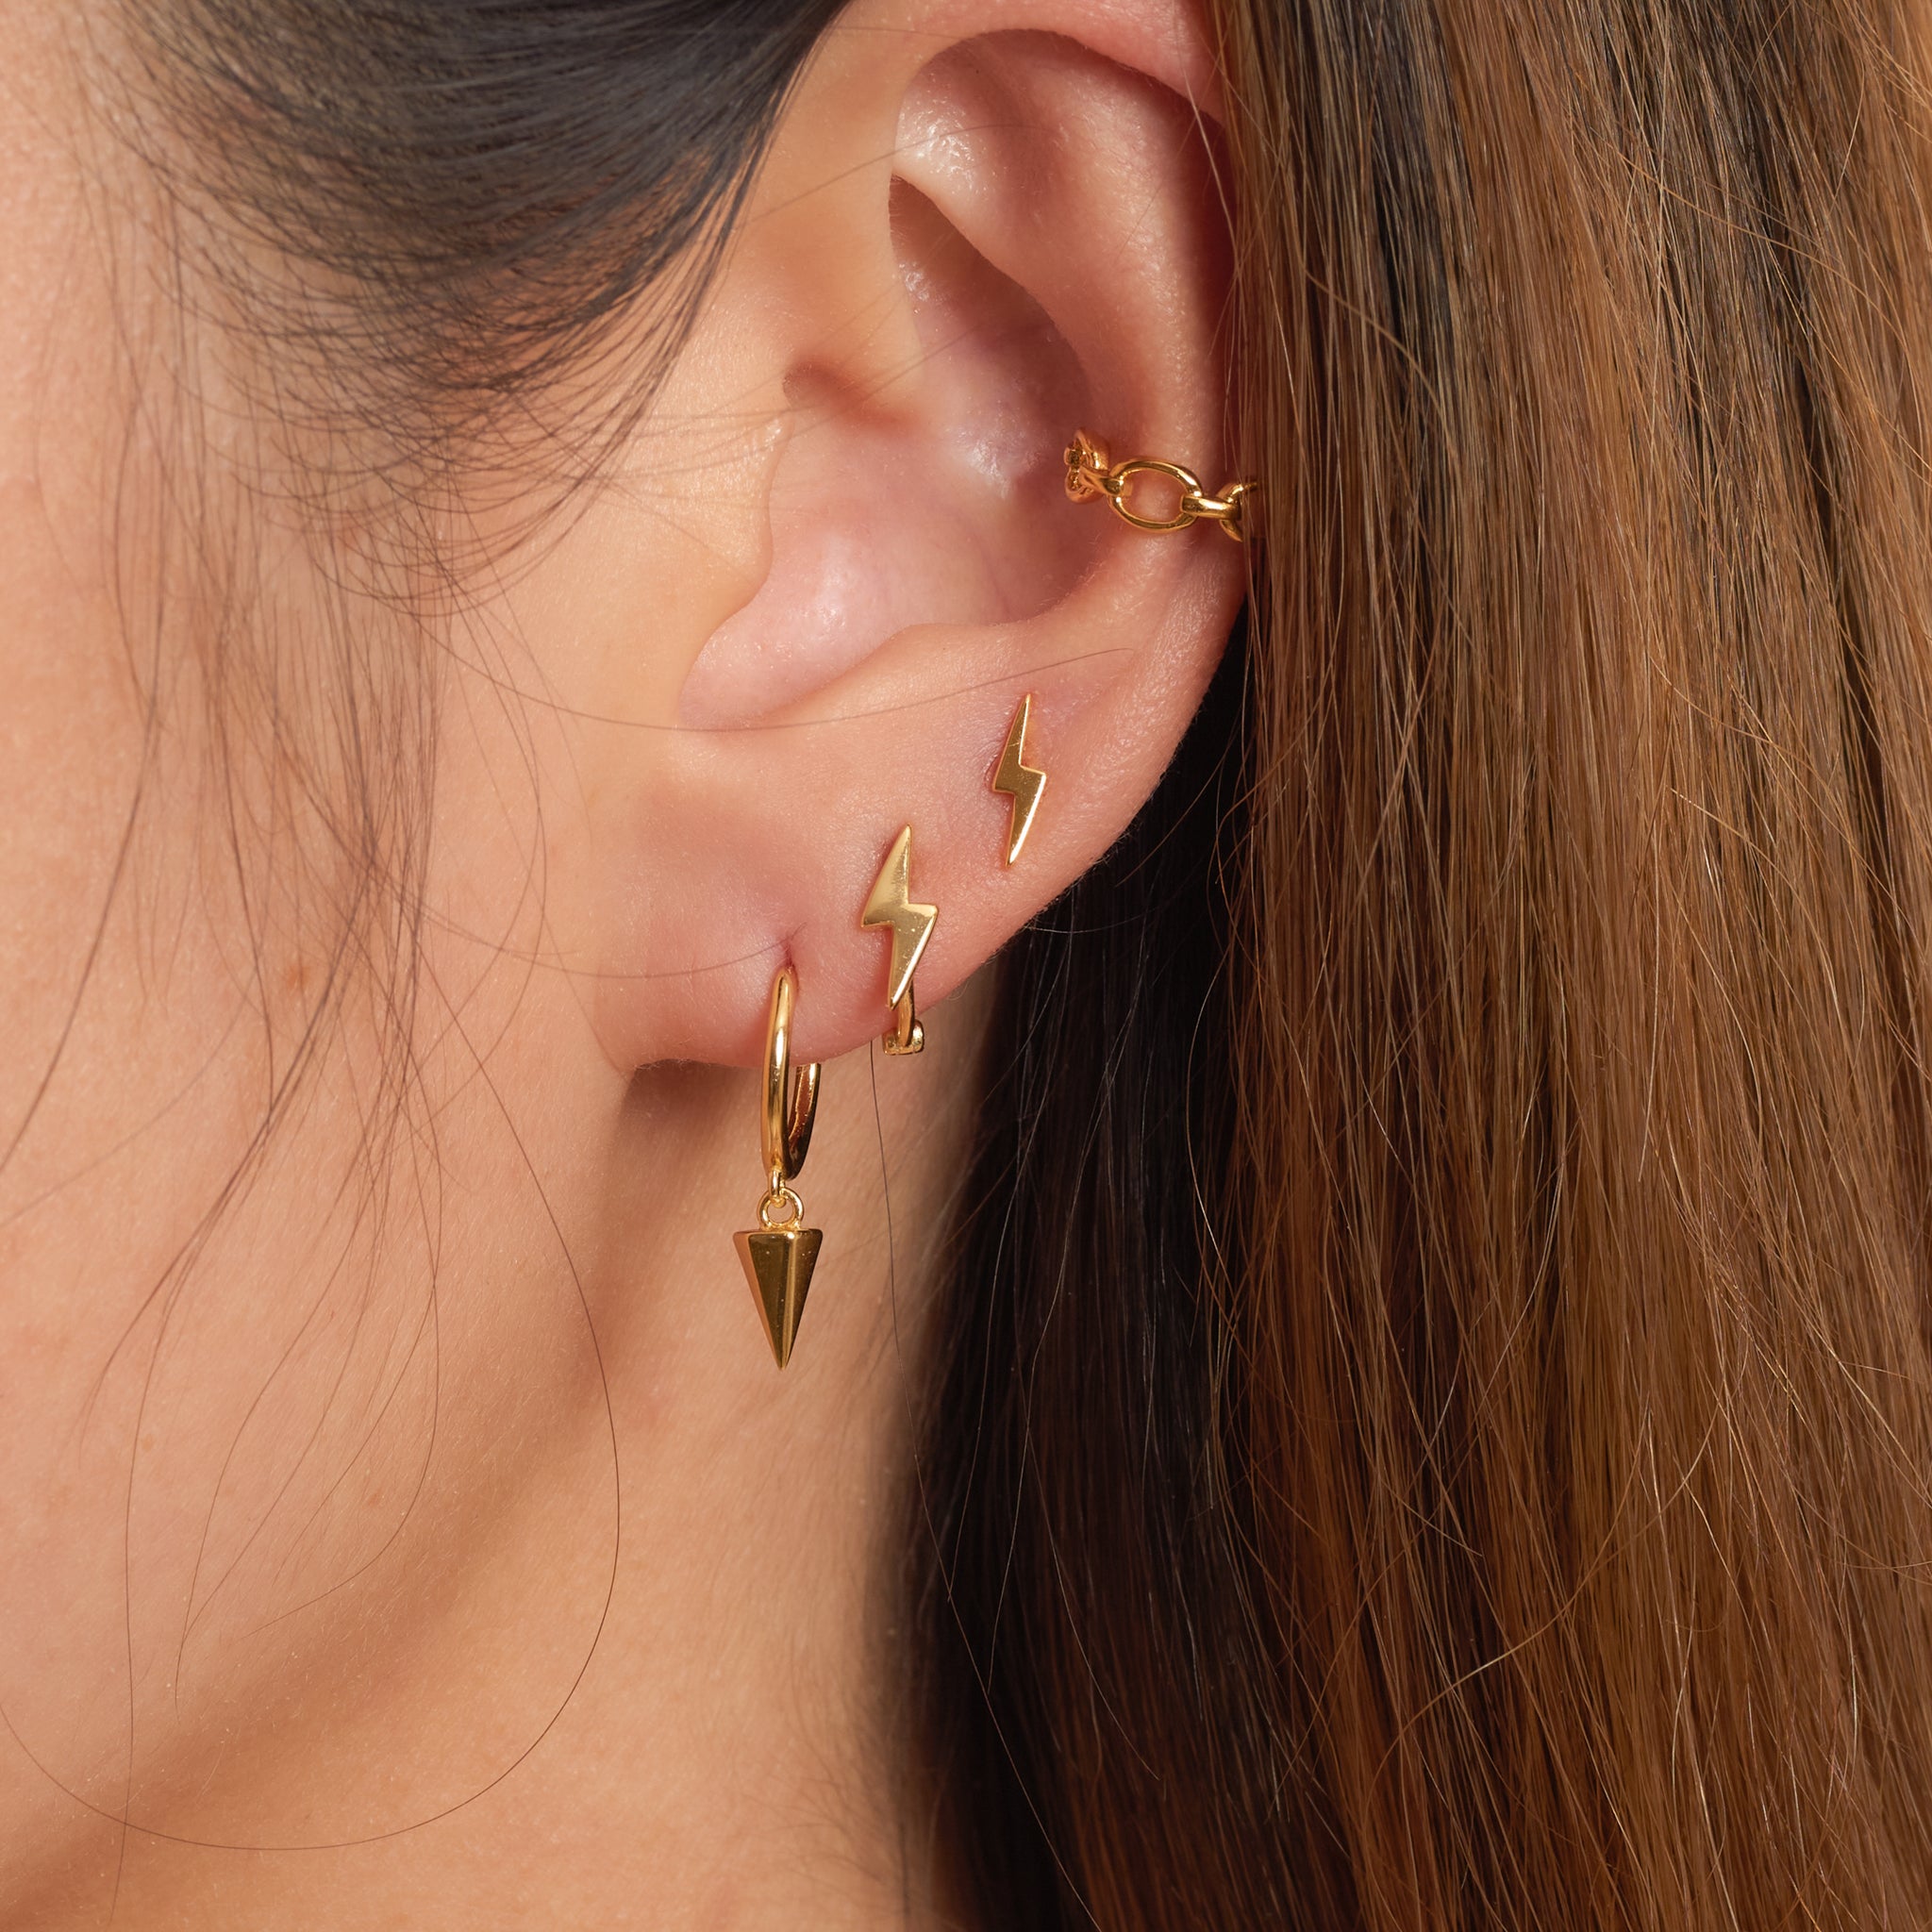 Gothic Spike Hoop Earrings Edgy Sleek Charm Dangle Gold Huggie Hoops by Doviana